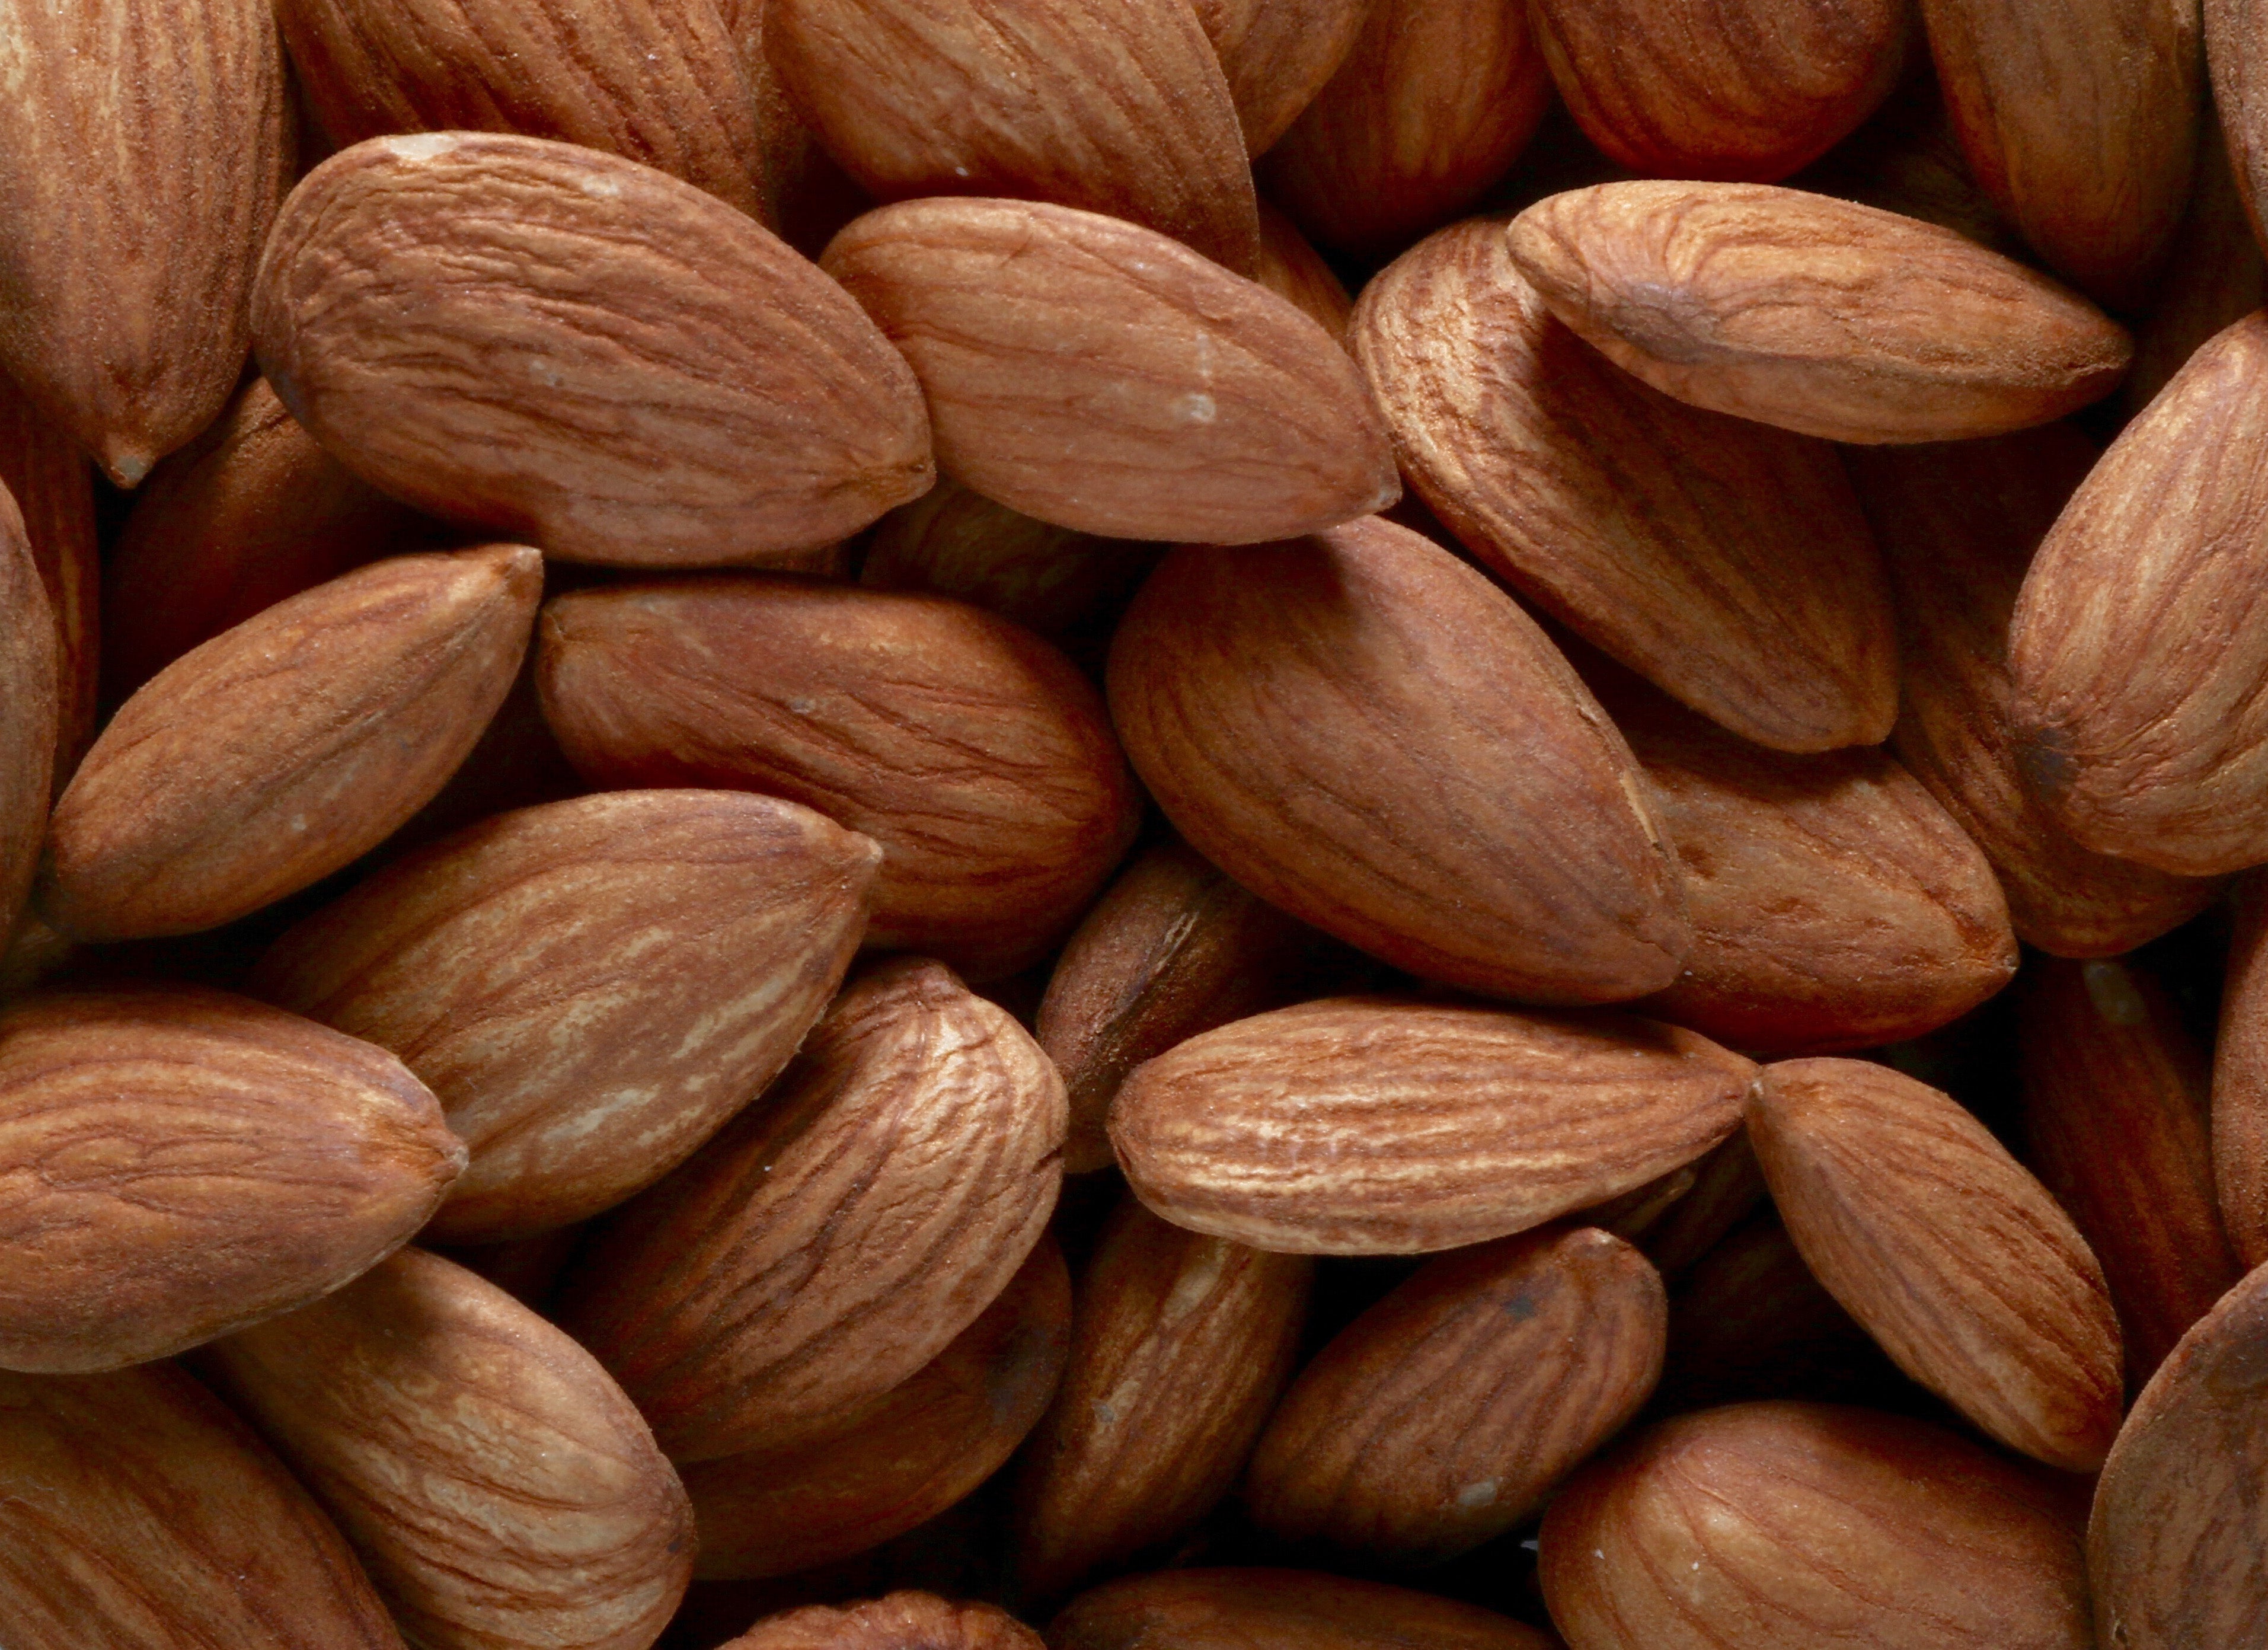 Almonds for making almond butter, a paleo peanut butter alternative